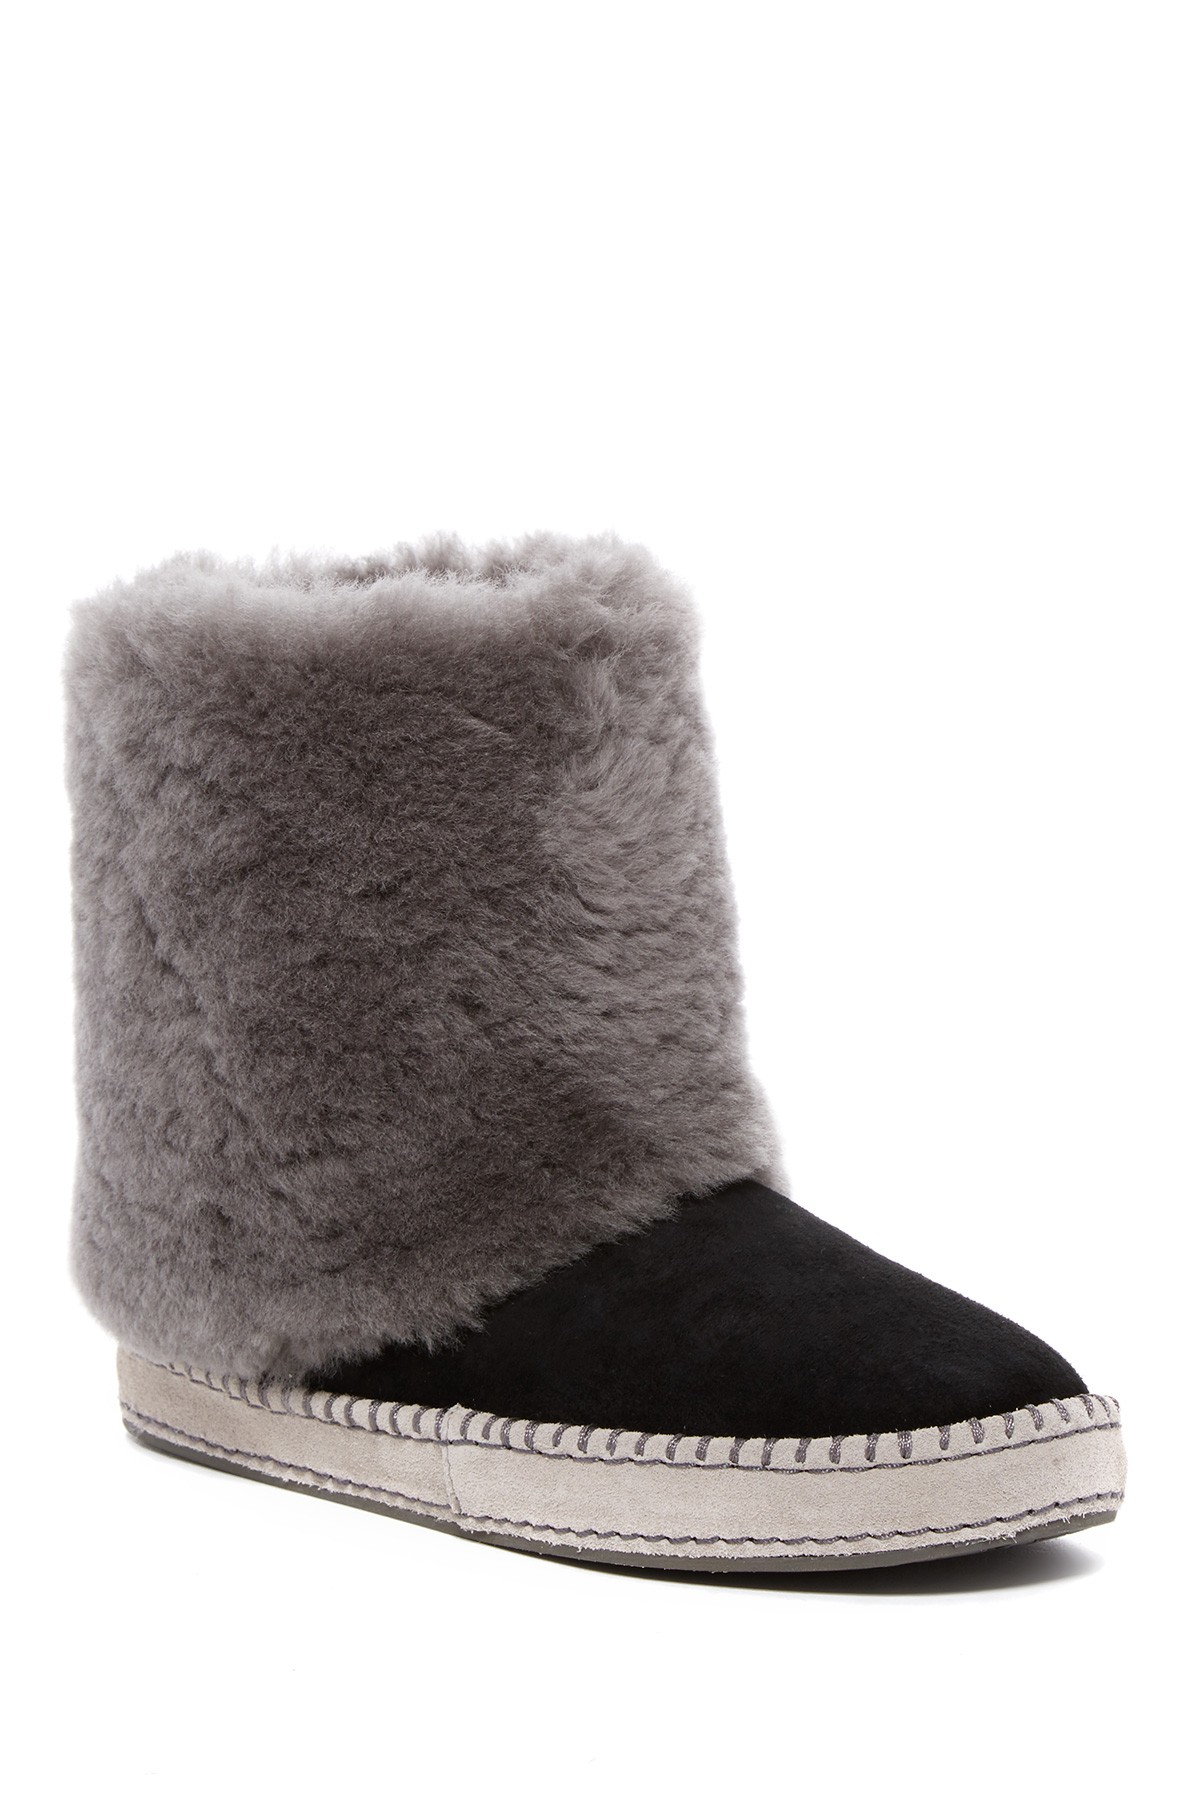 UGG Kestrel Genuine Sheepskin Cuff Boot in Gray | Lyst